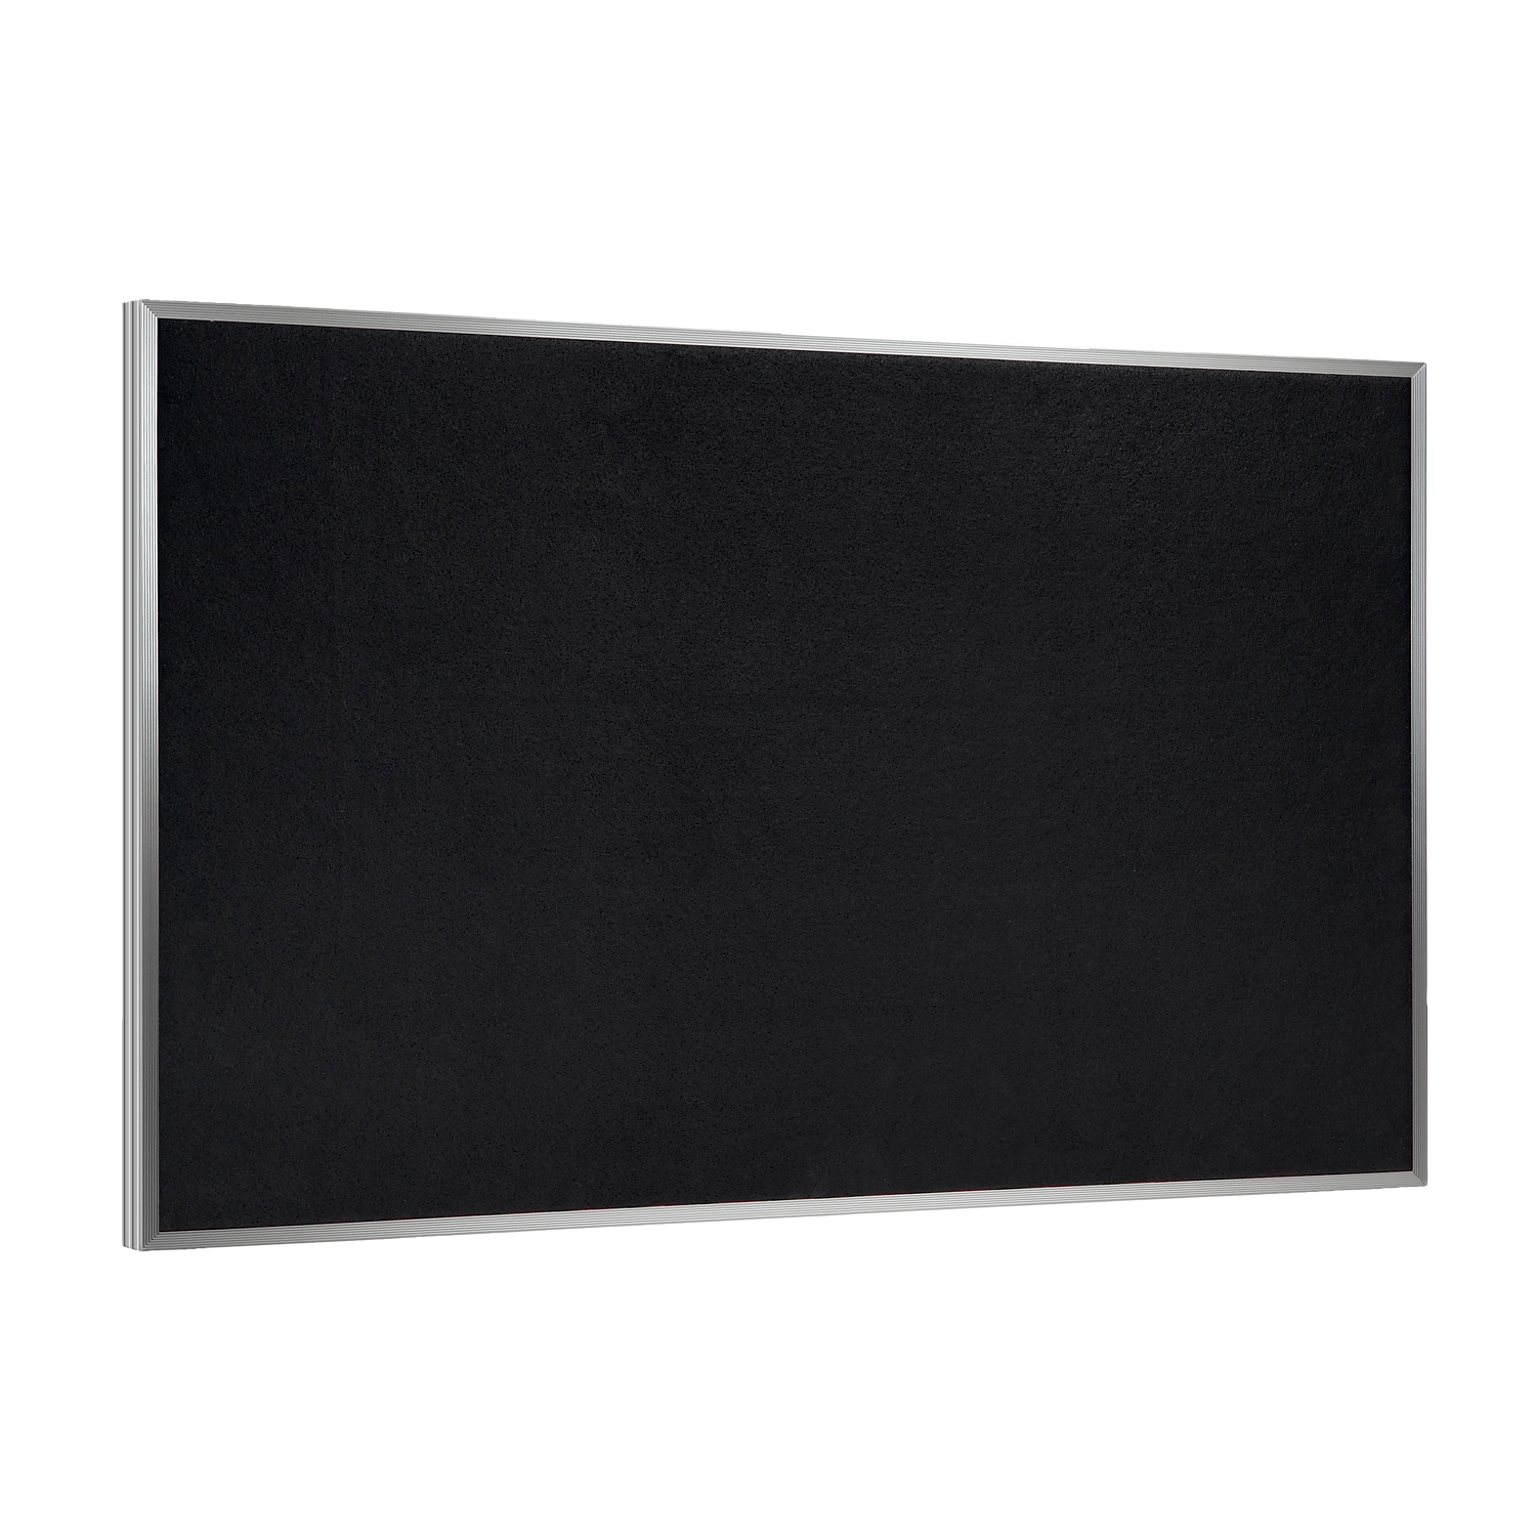 Ghent 4 H x 12 W Recycled Bulletin Board with Aluminum Frame, Black (ATR412-BK)